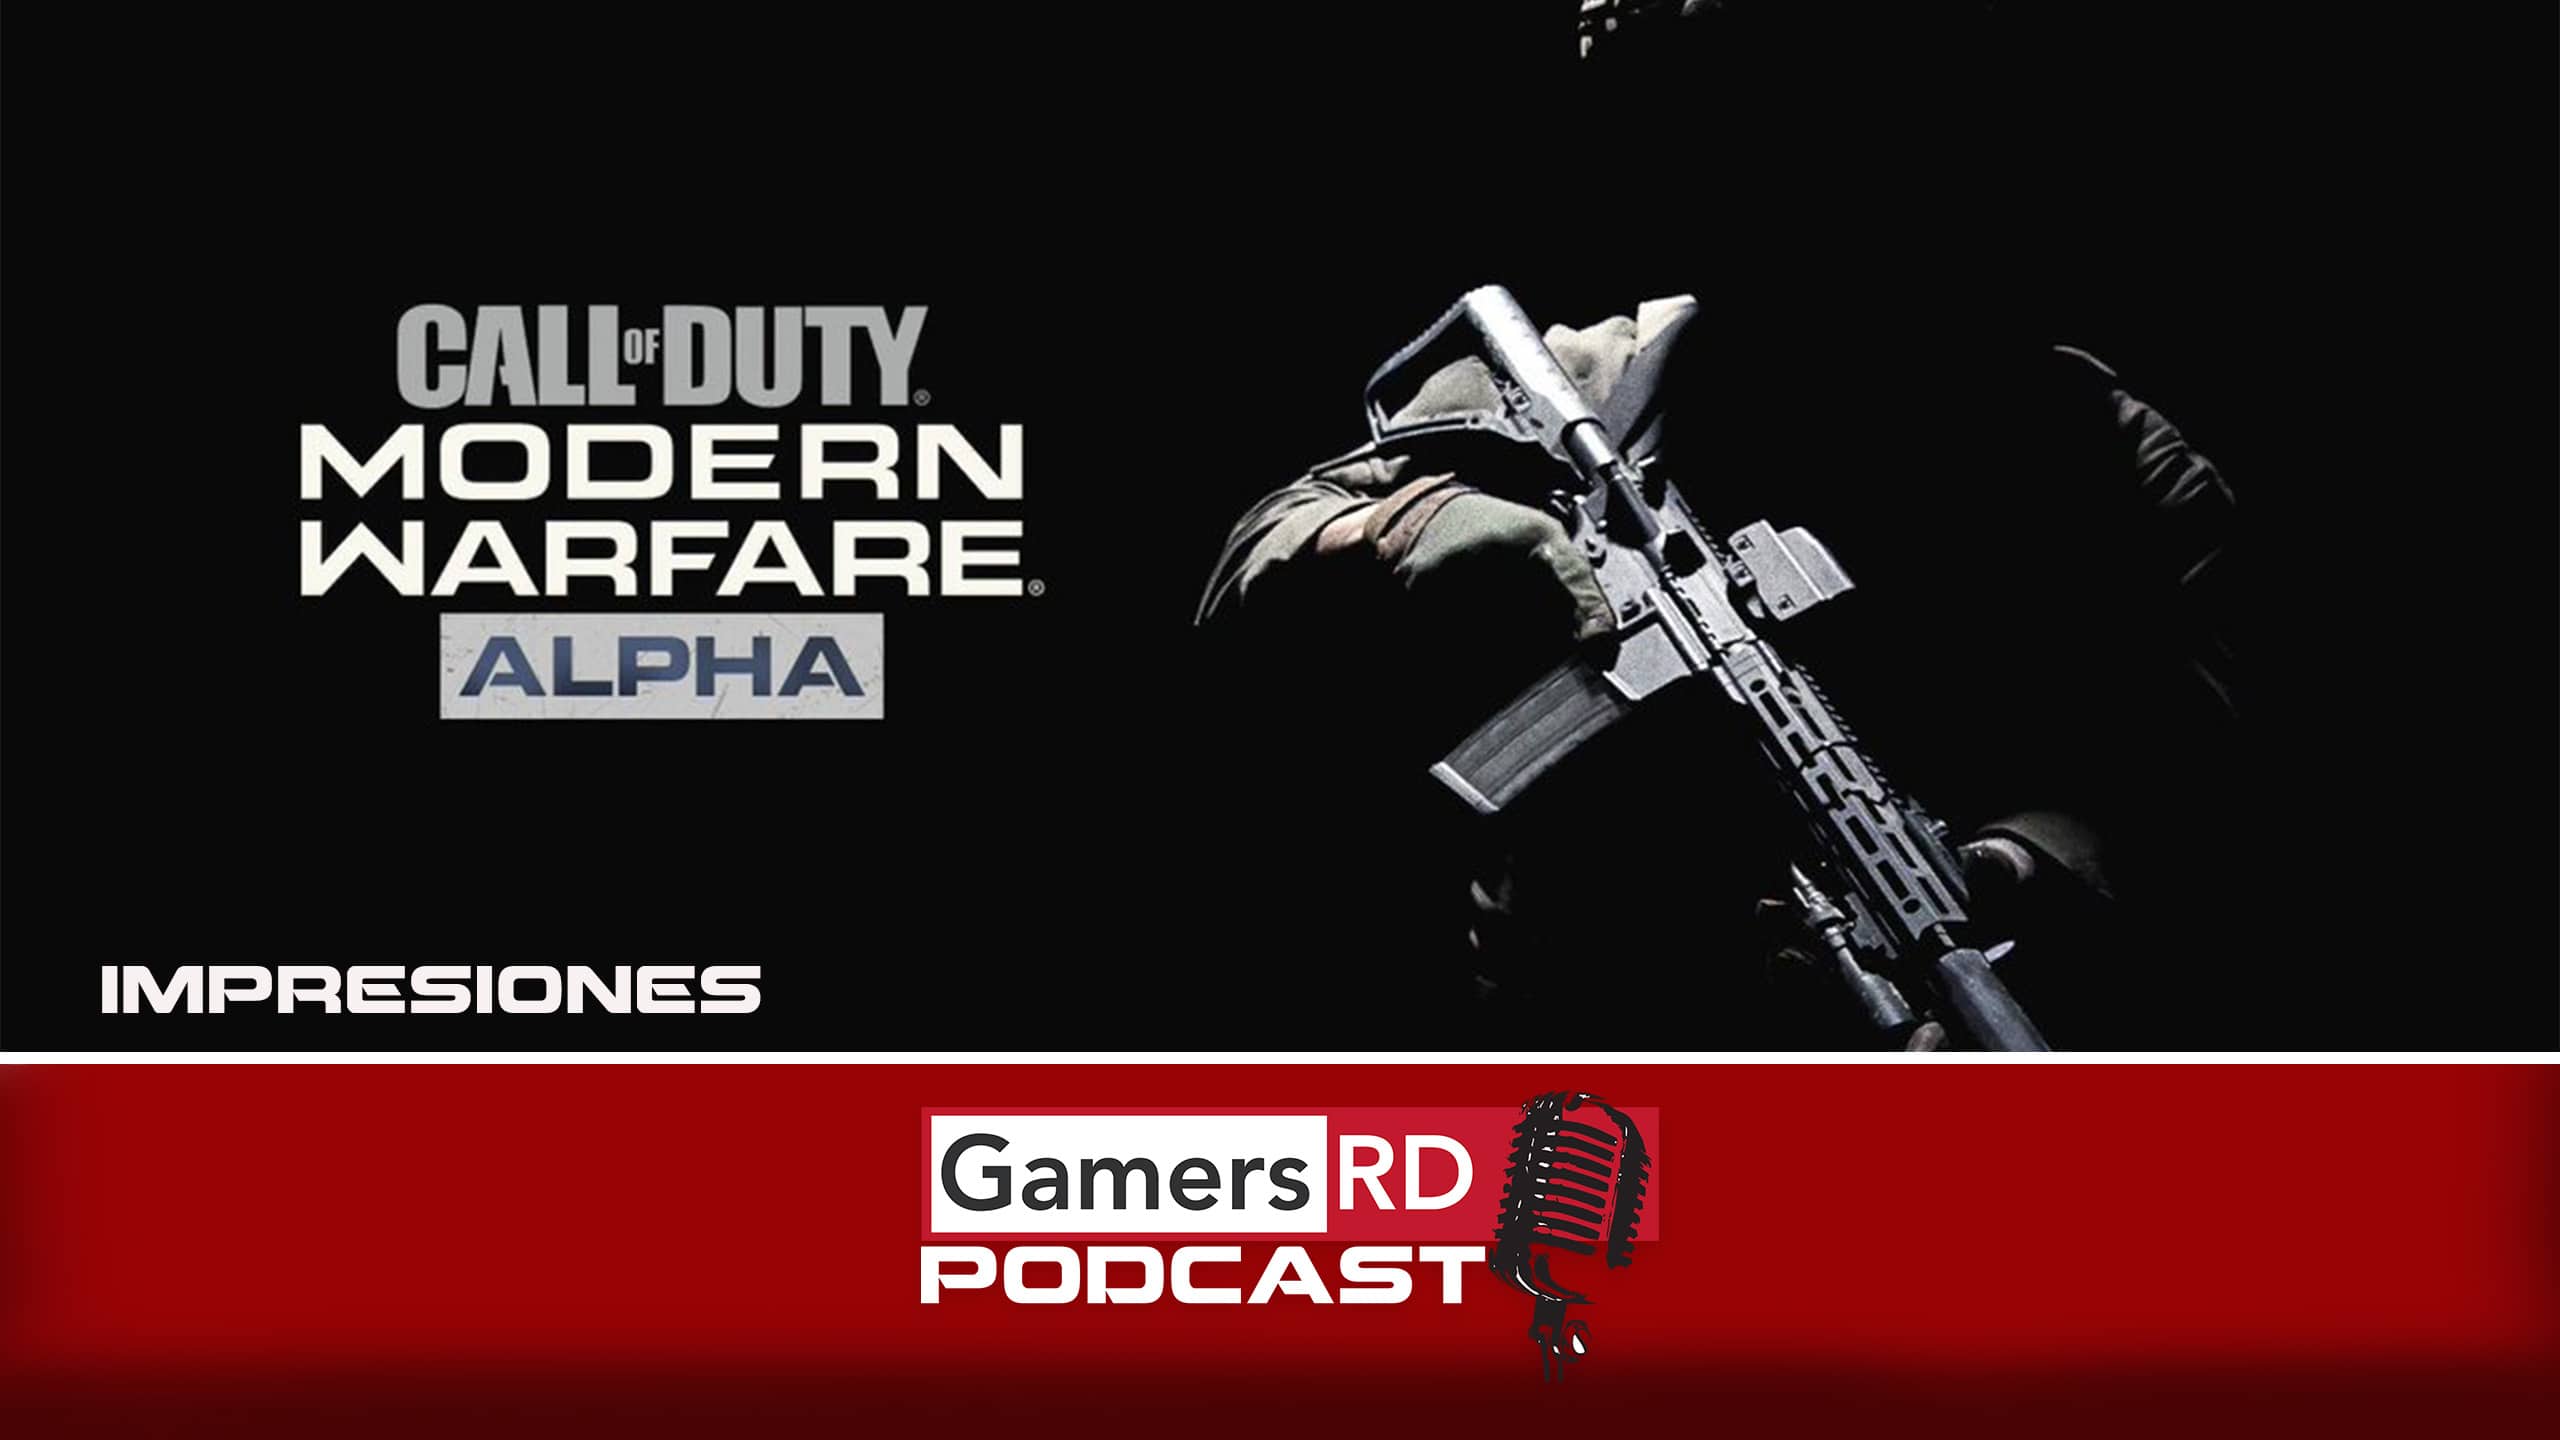 GamersRD Podcast 90: Impresiones Alpha Call of Duty: Modern Warfare 2v2 Gunfight